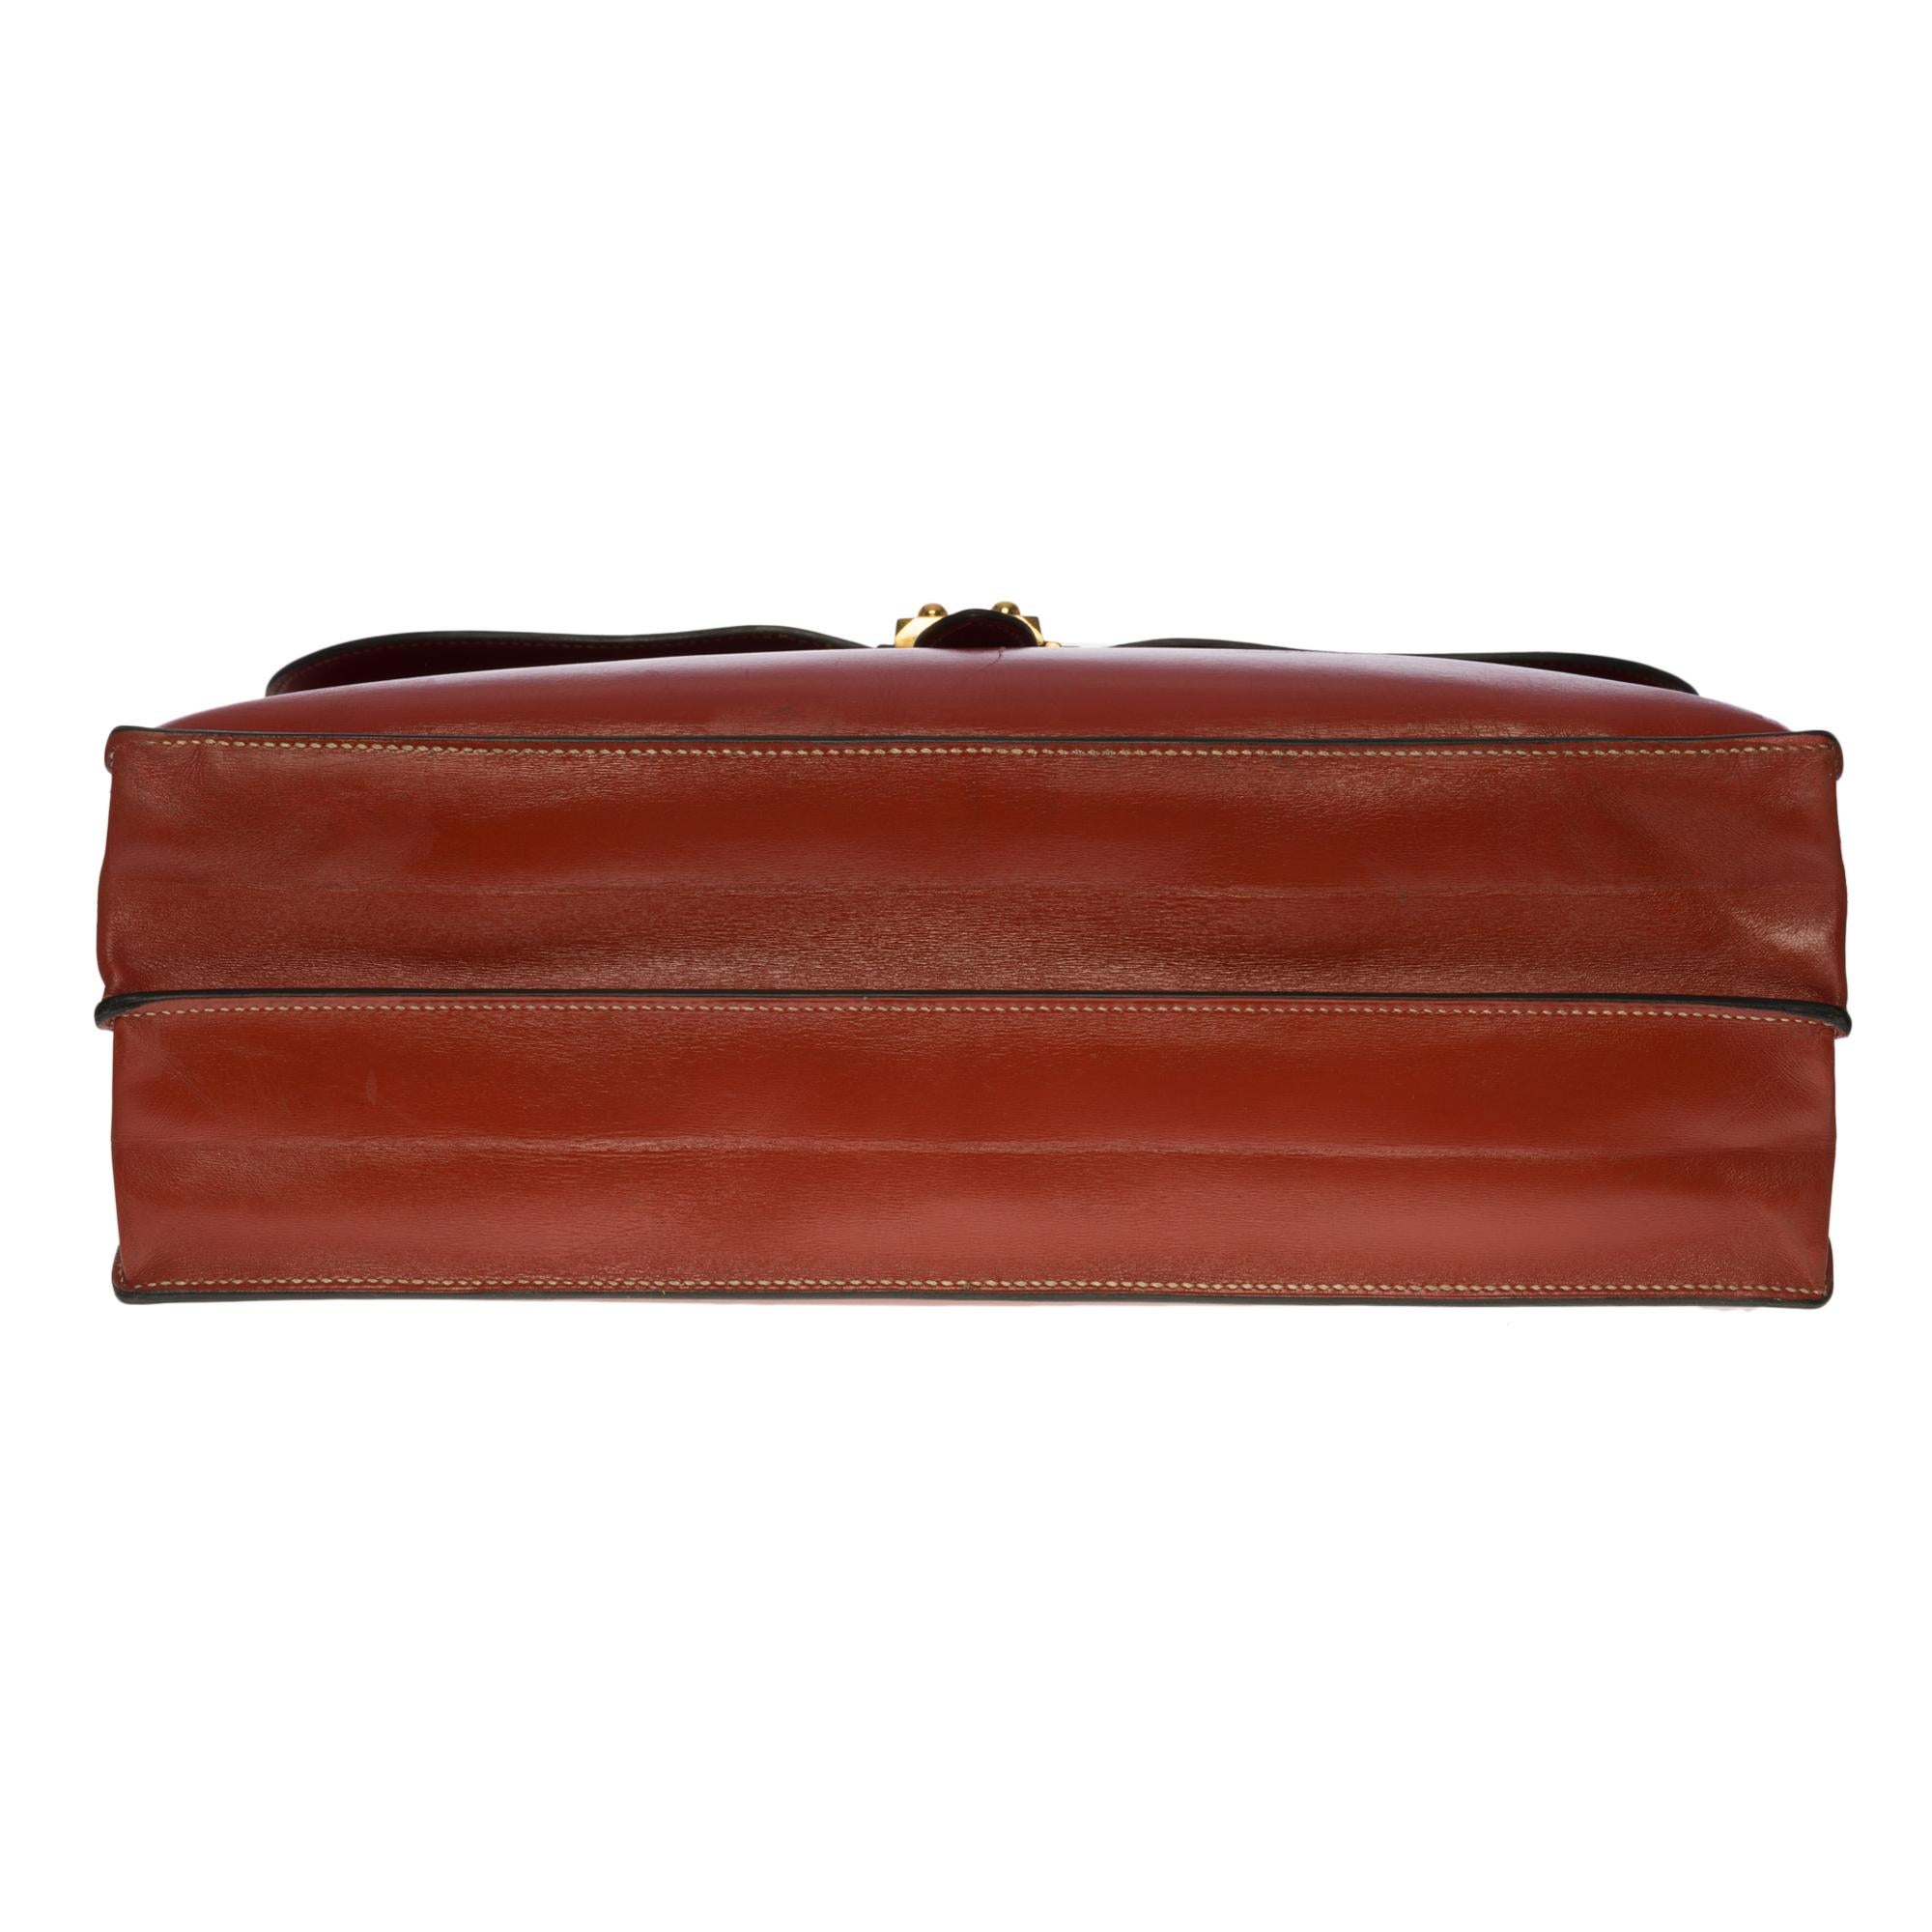 Rare Hermès Sac à dépêches briefcase in Rouge brique calf box leather, GHW 1